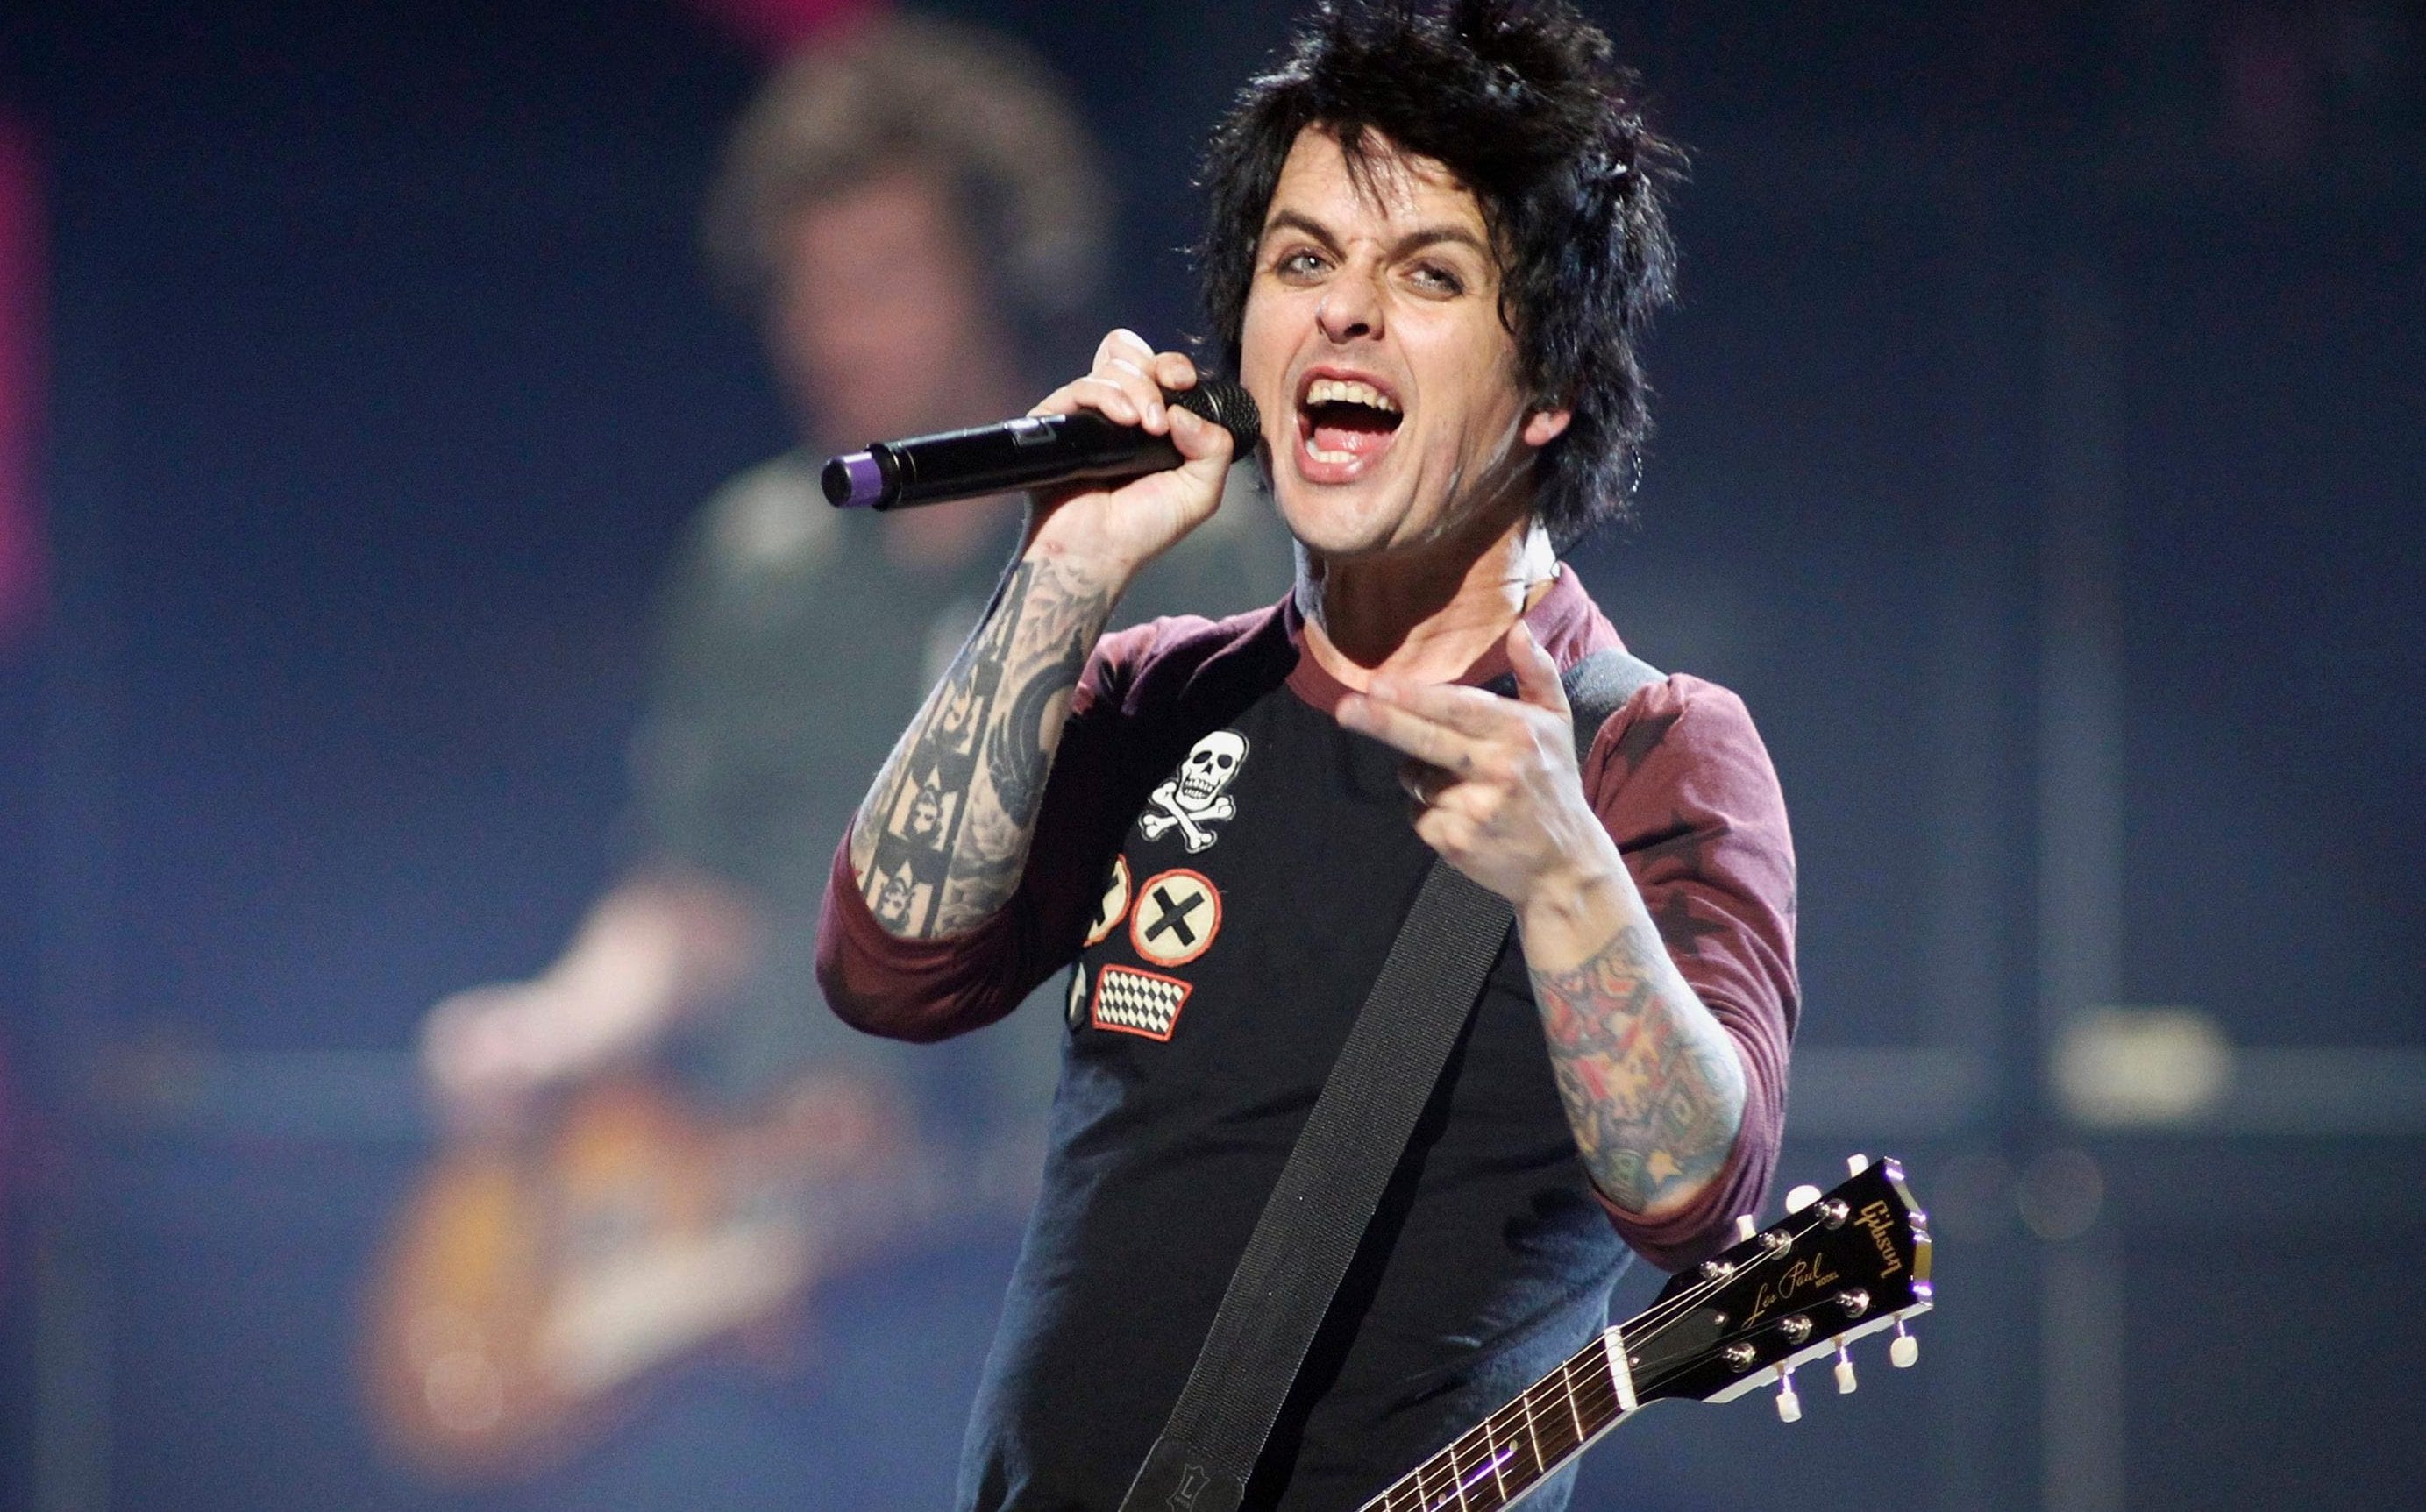 Tanti auguri a Billie Joe Armstrong, frontman dei “Green Day”